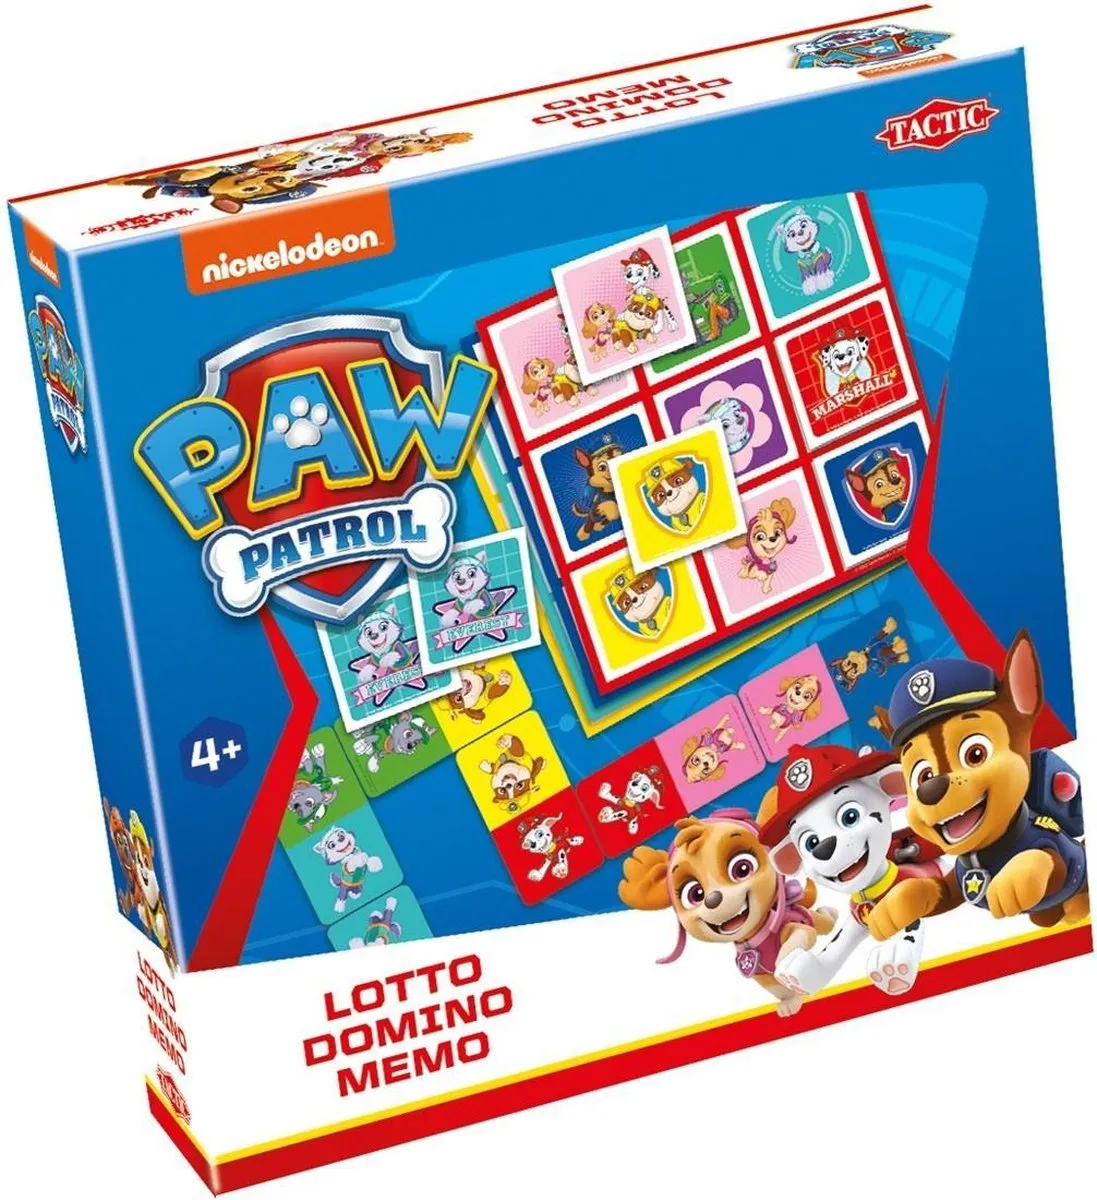 Tactic - PAW Patrol 3-in-1 Bordspel: Memo, Lotto, Domino speelgoed